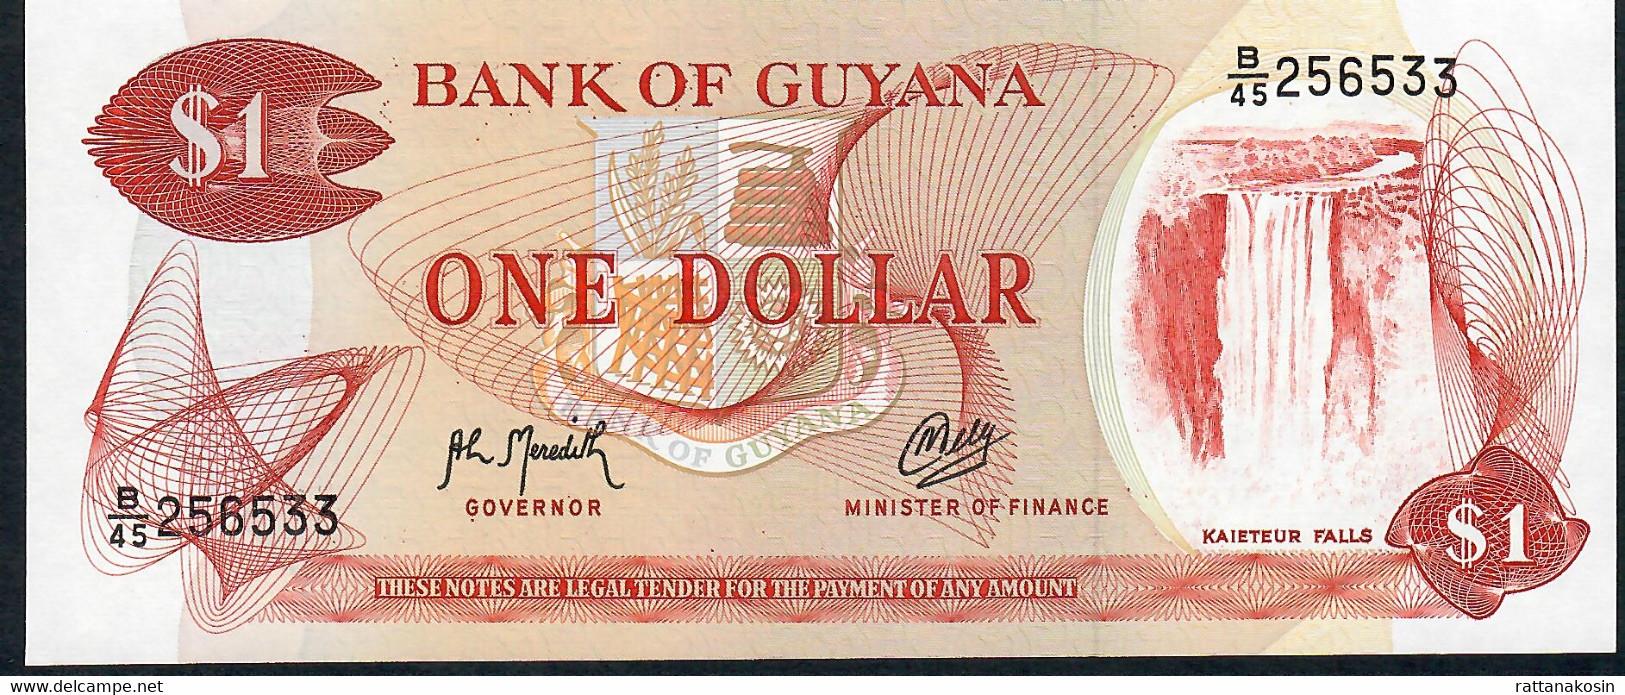 1983 10 Dollars UNC Guyana p-23c 